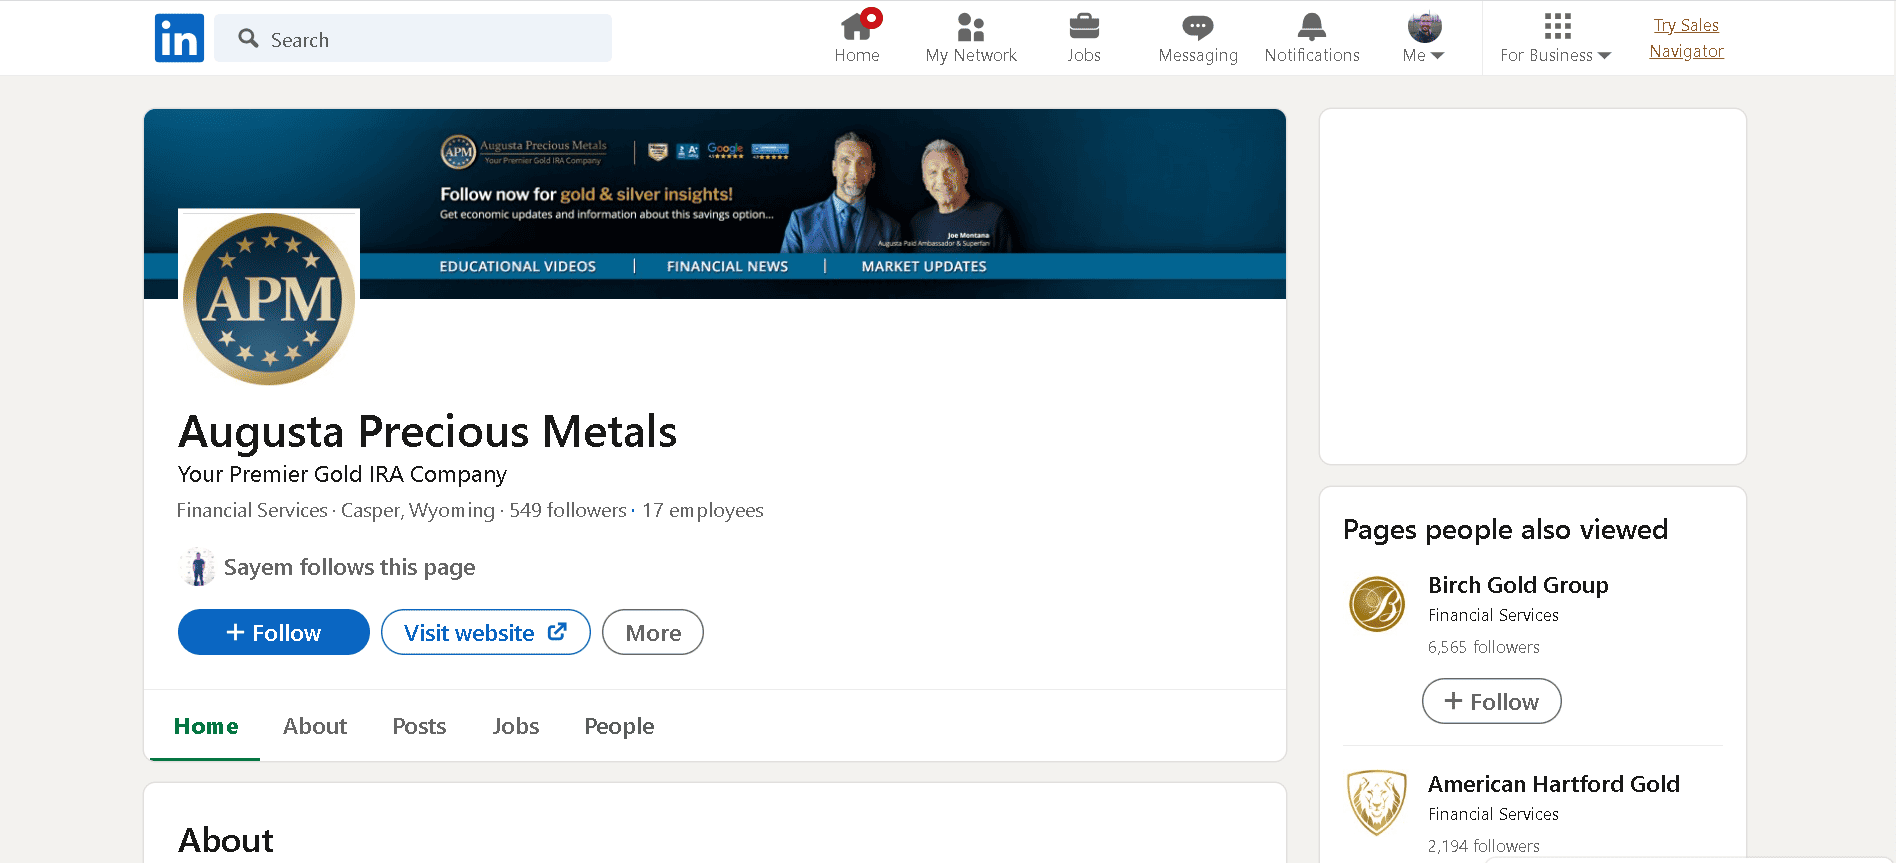 Augusta Precious Metals official LinkedIn profile